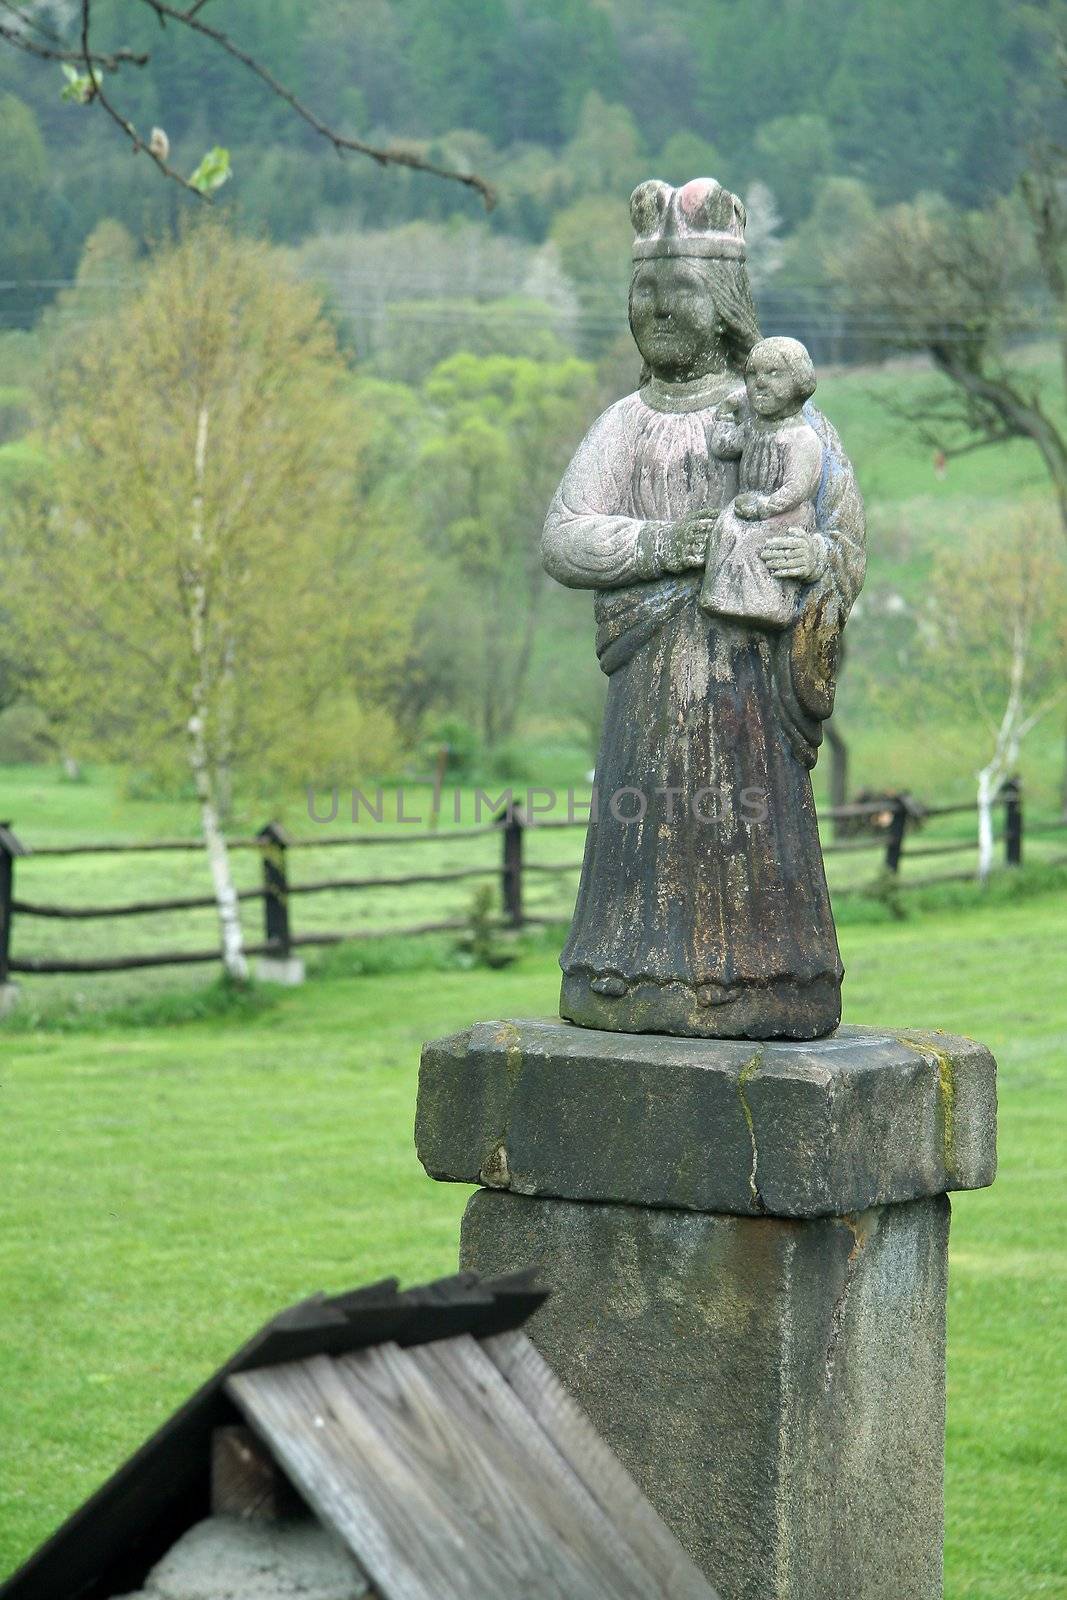 old concrete religious statue, rural landscape in background